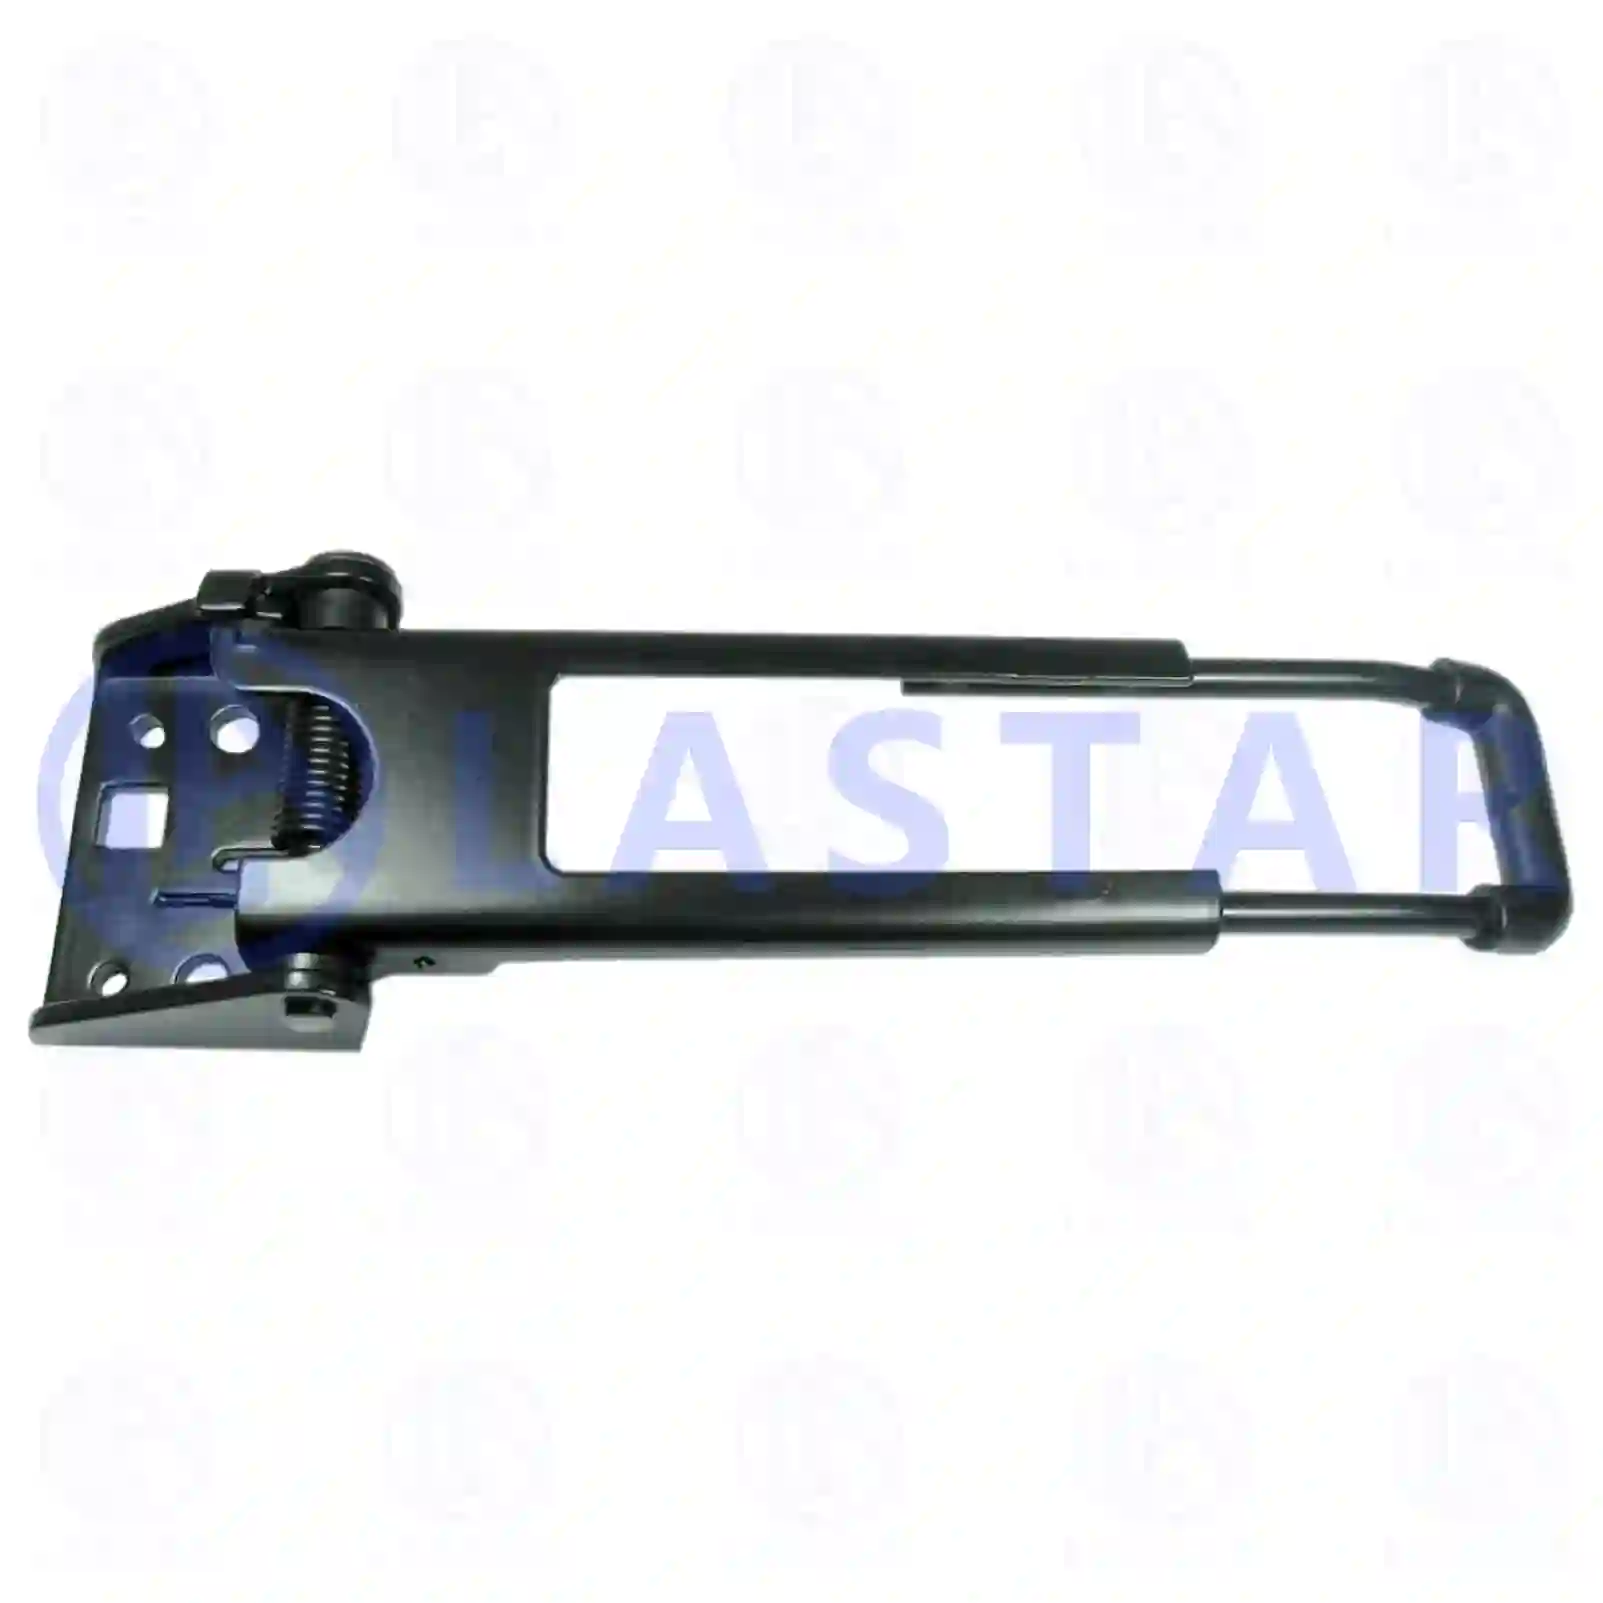  Door catch || Lastar Spare Part | Truck Spare Parts, Auotomotive Spare Parts